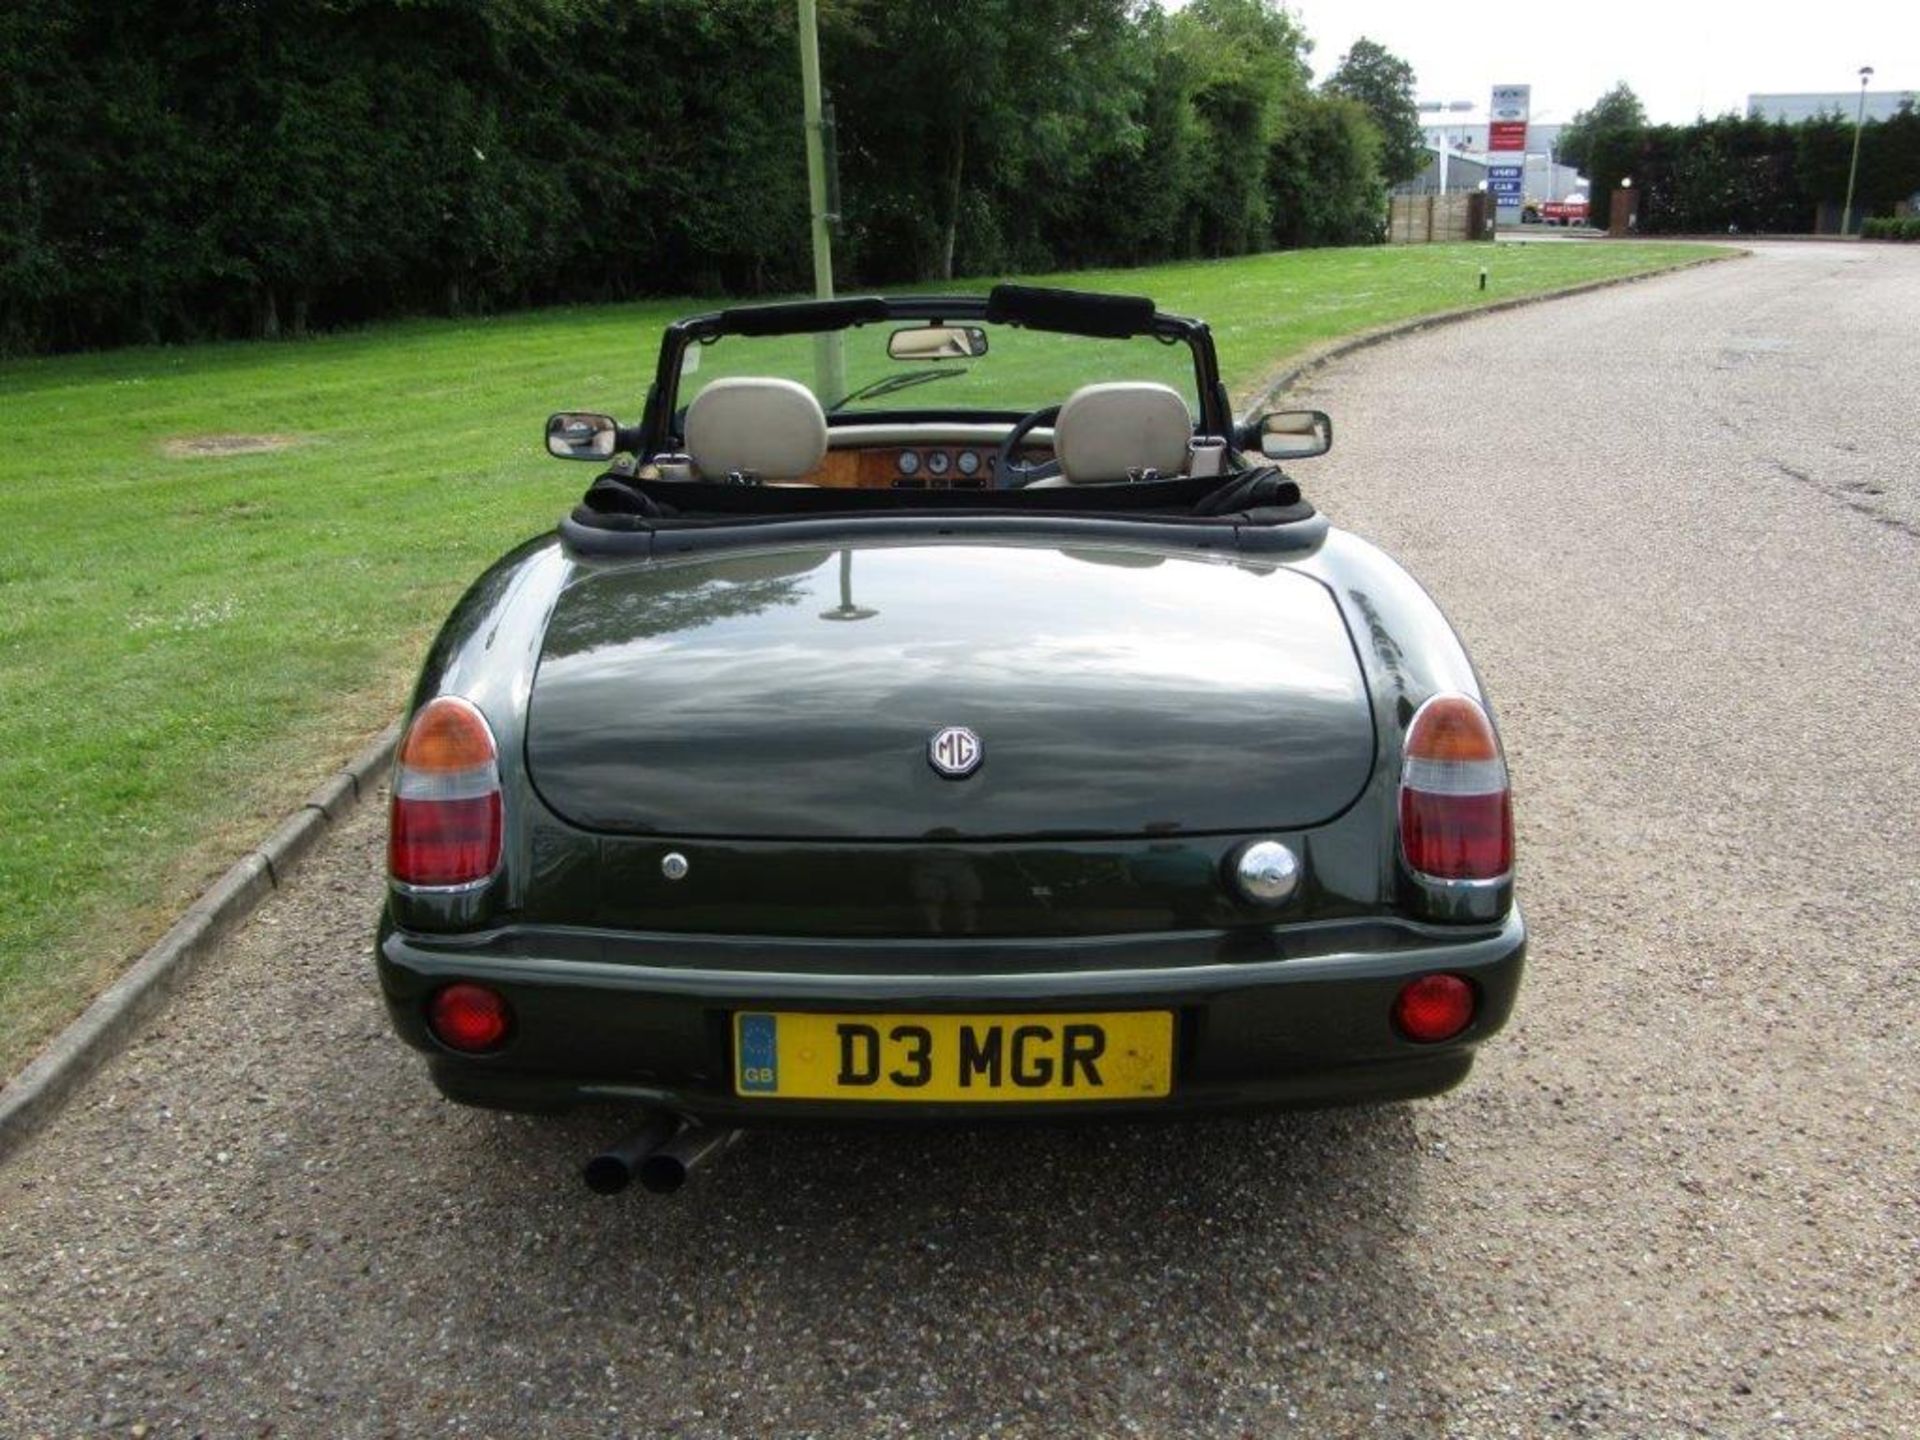 1994 MG RV8 - Image 7 of 28